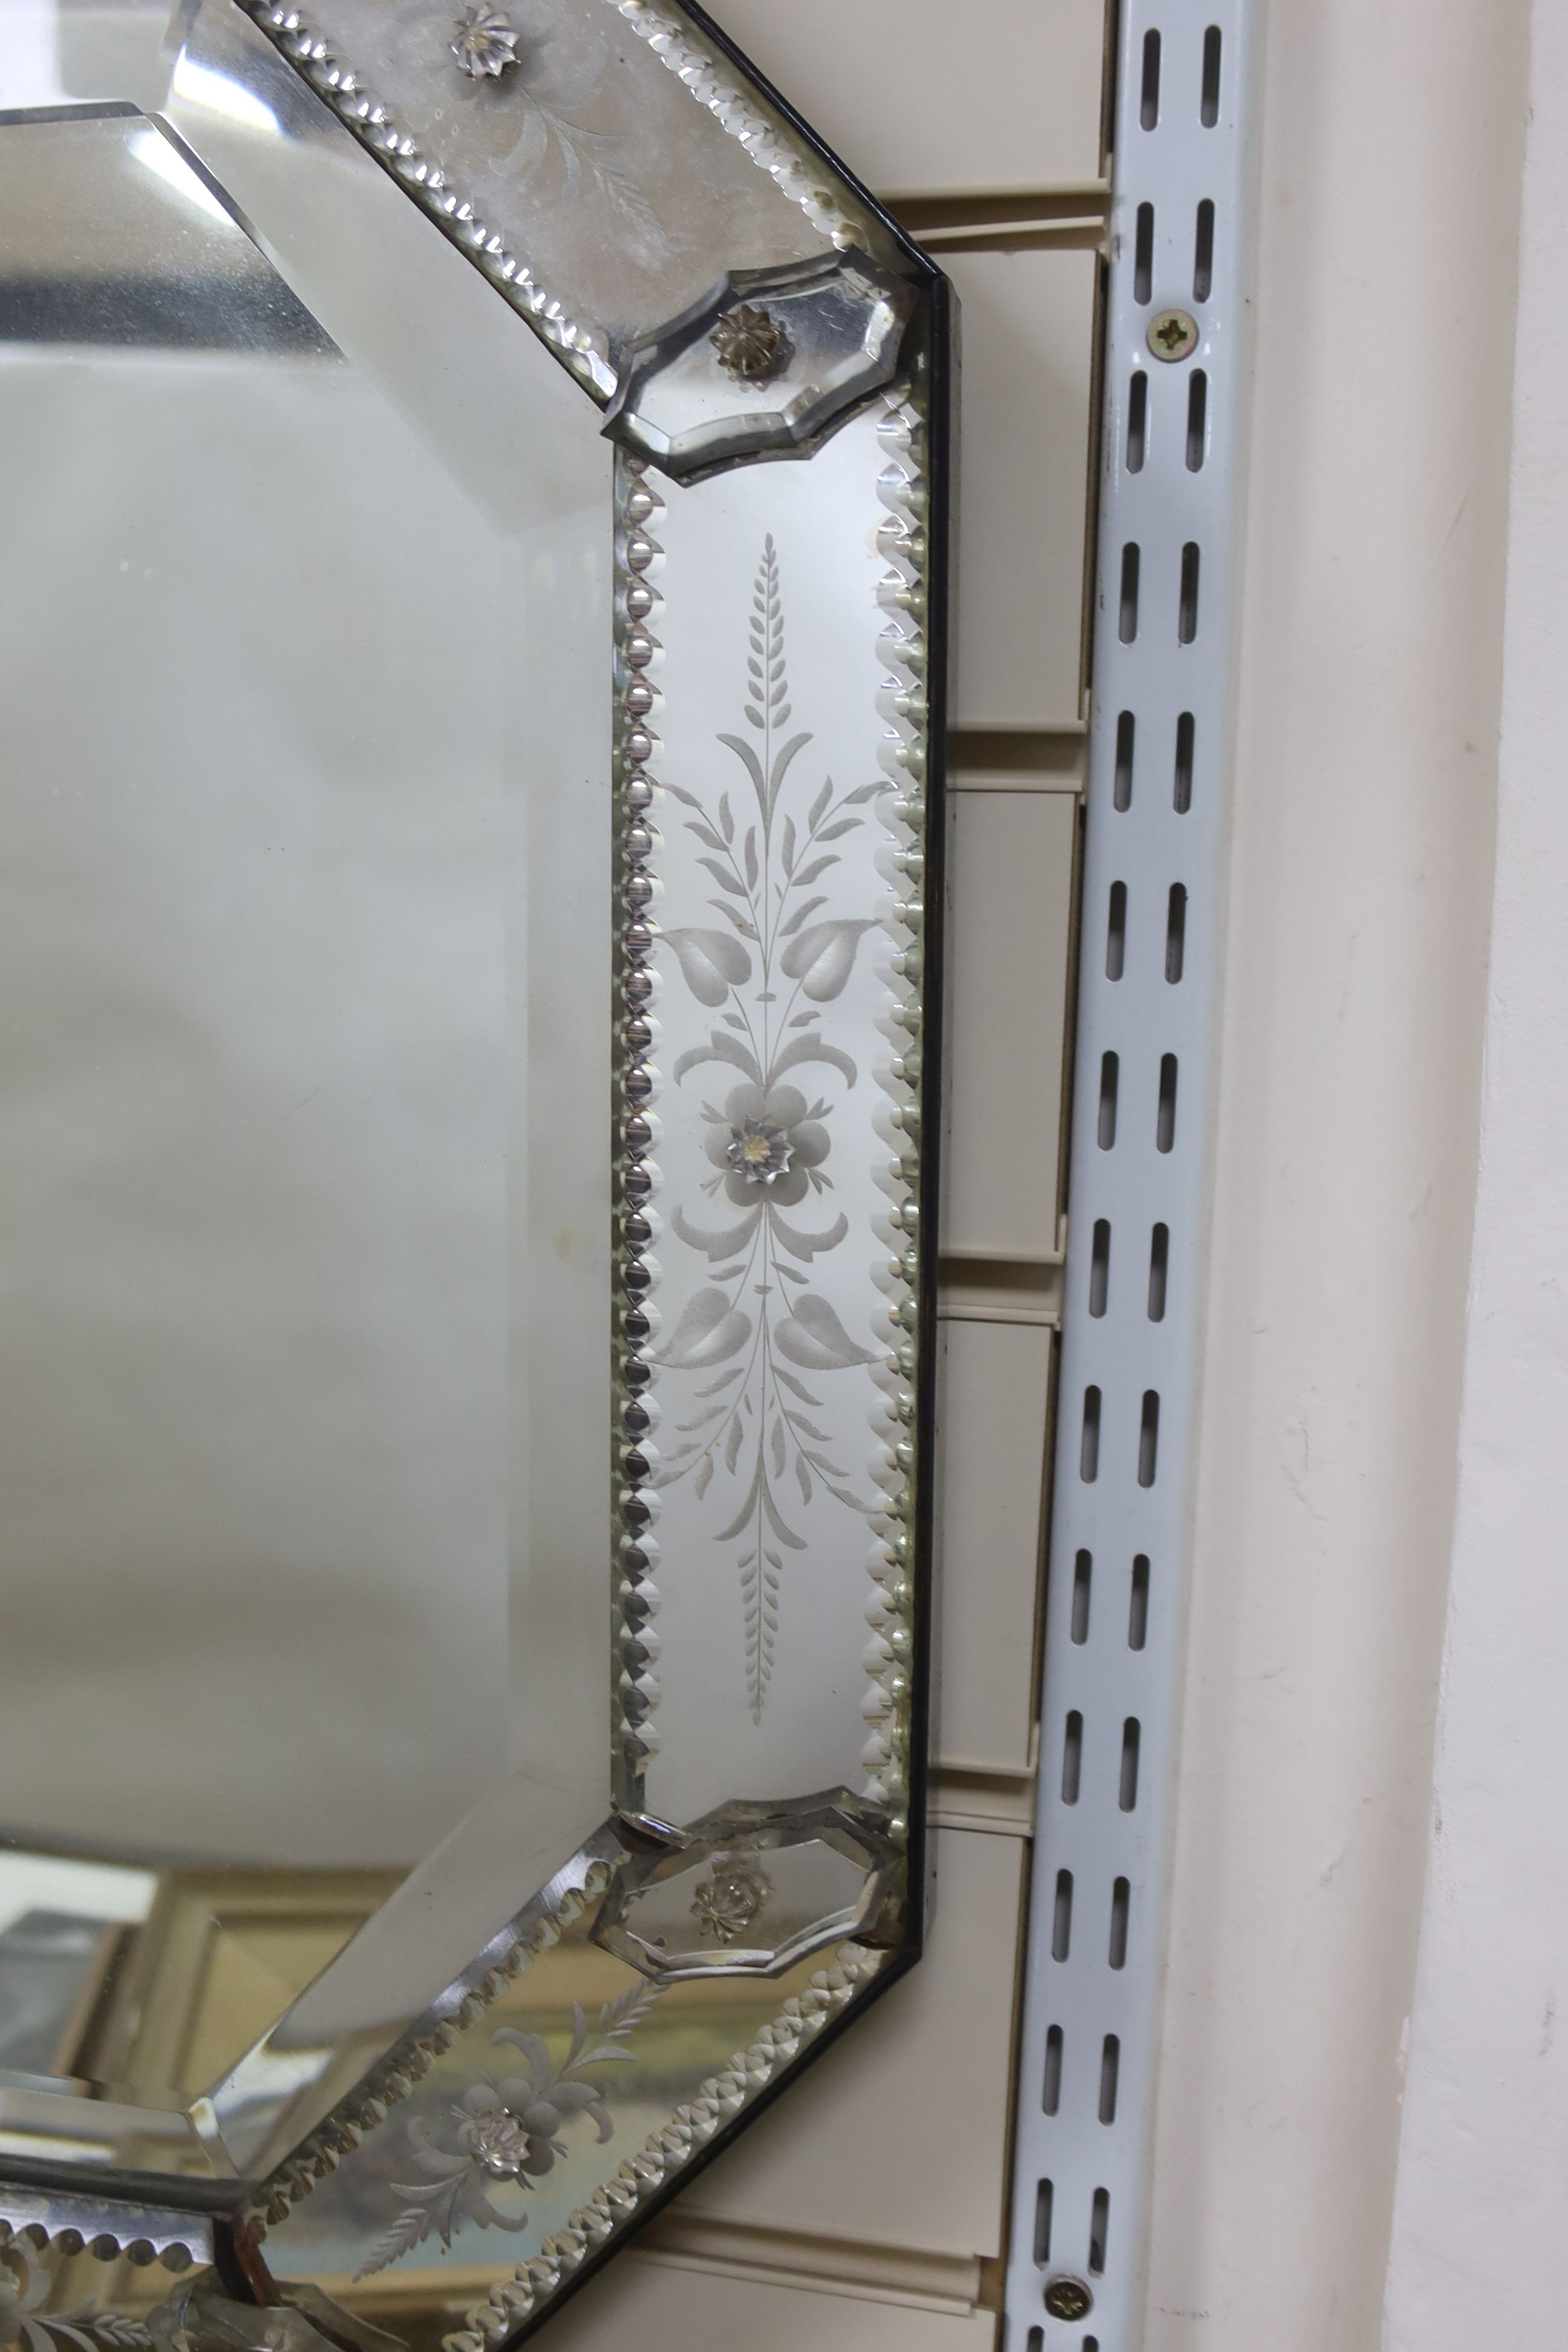 A 19th century Venetian glass mirror, 40 cms wide x 61 cms high.